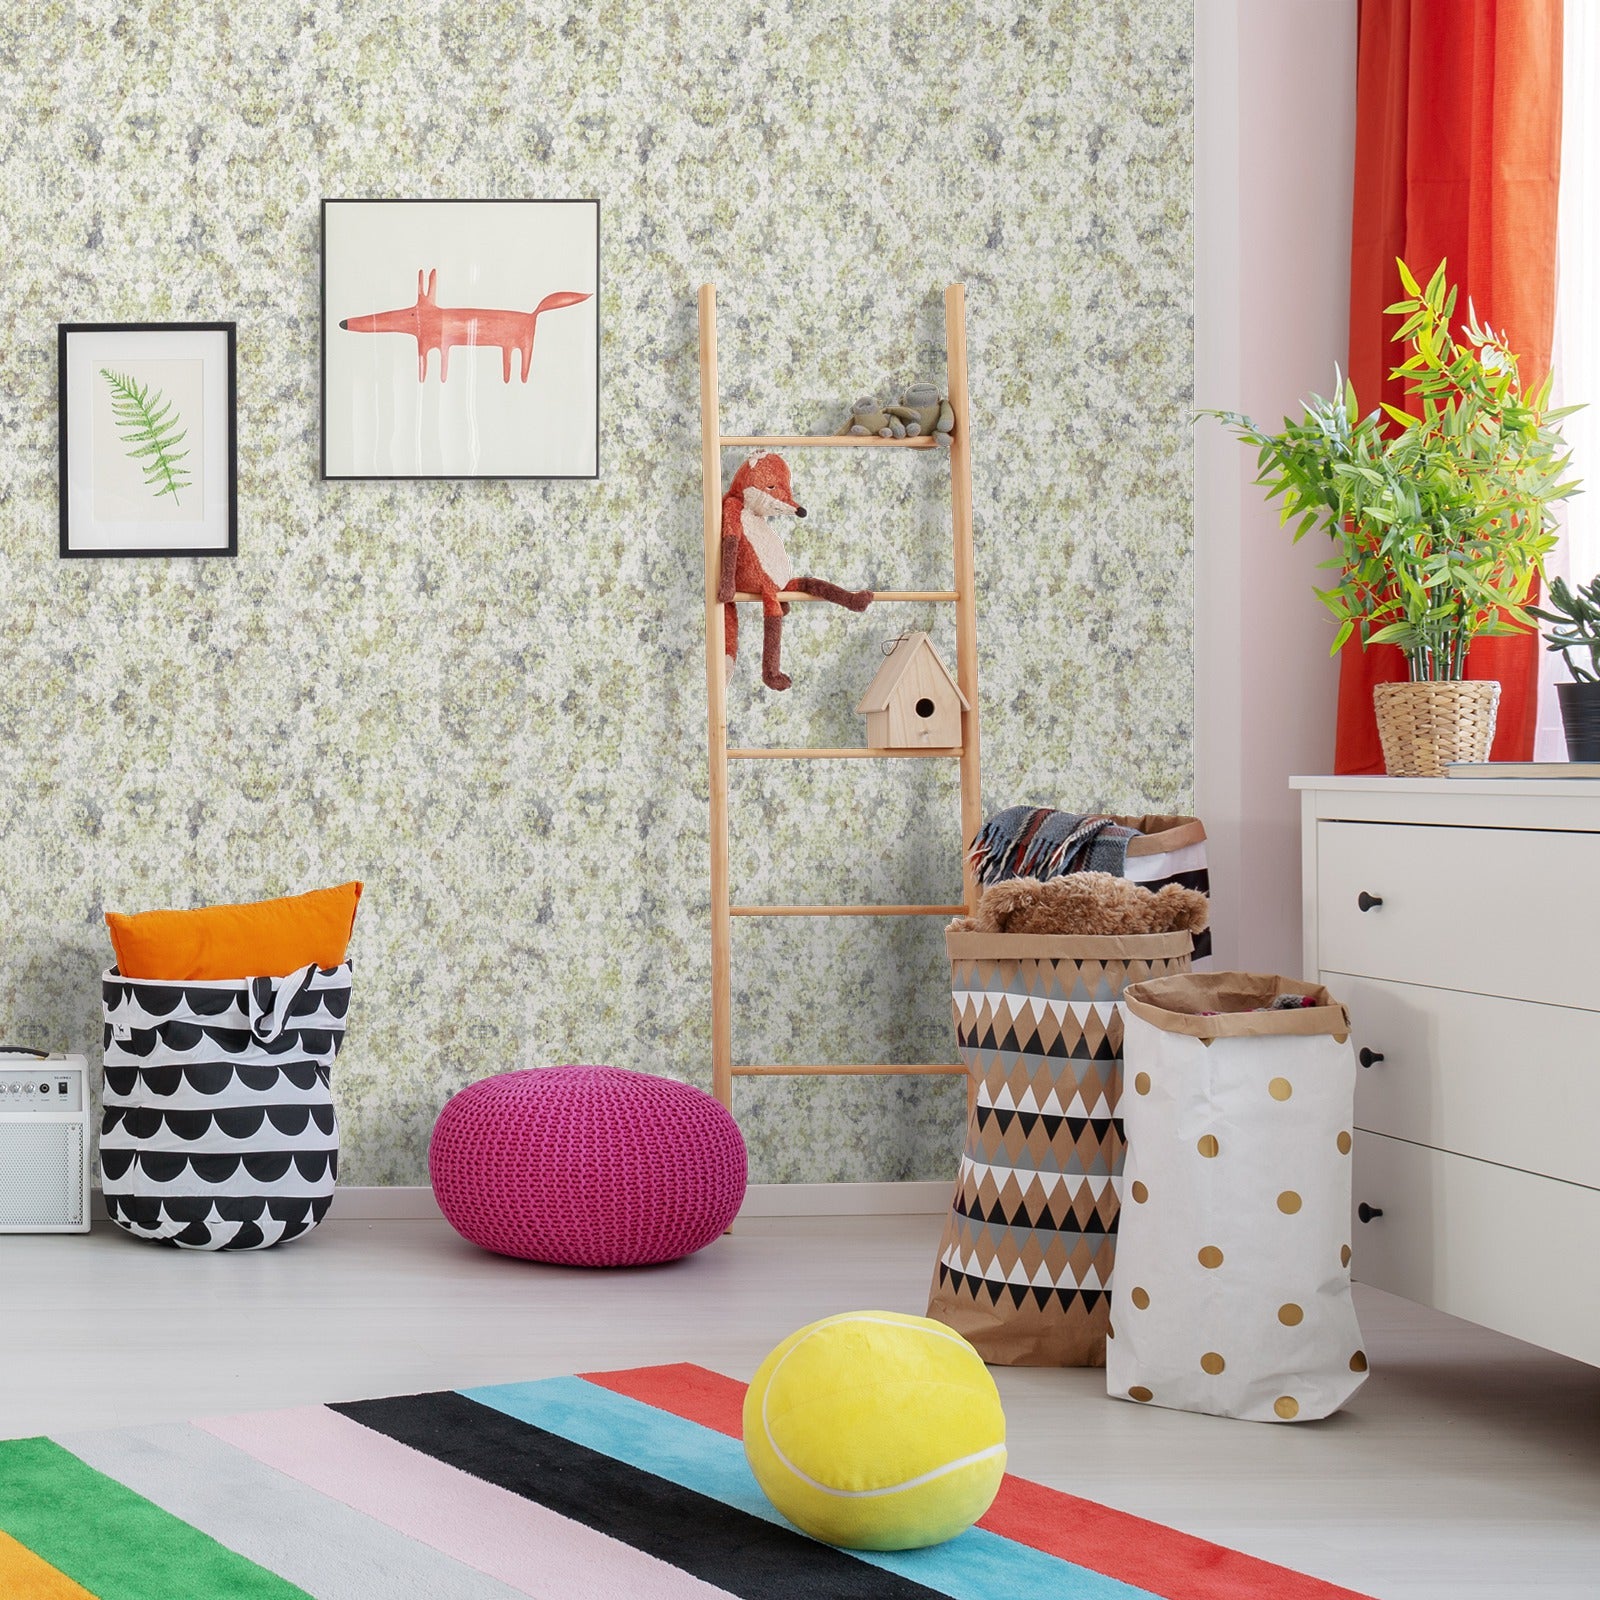 18' L x 24" W Peel & Stick Wallpaper Roll - Green Soft Flowers by DecoWorks - Wallpaper - Americanflat